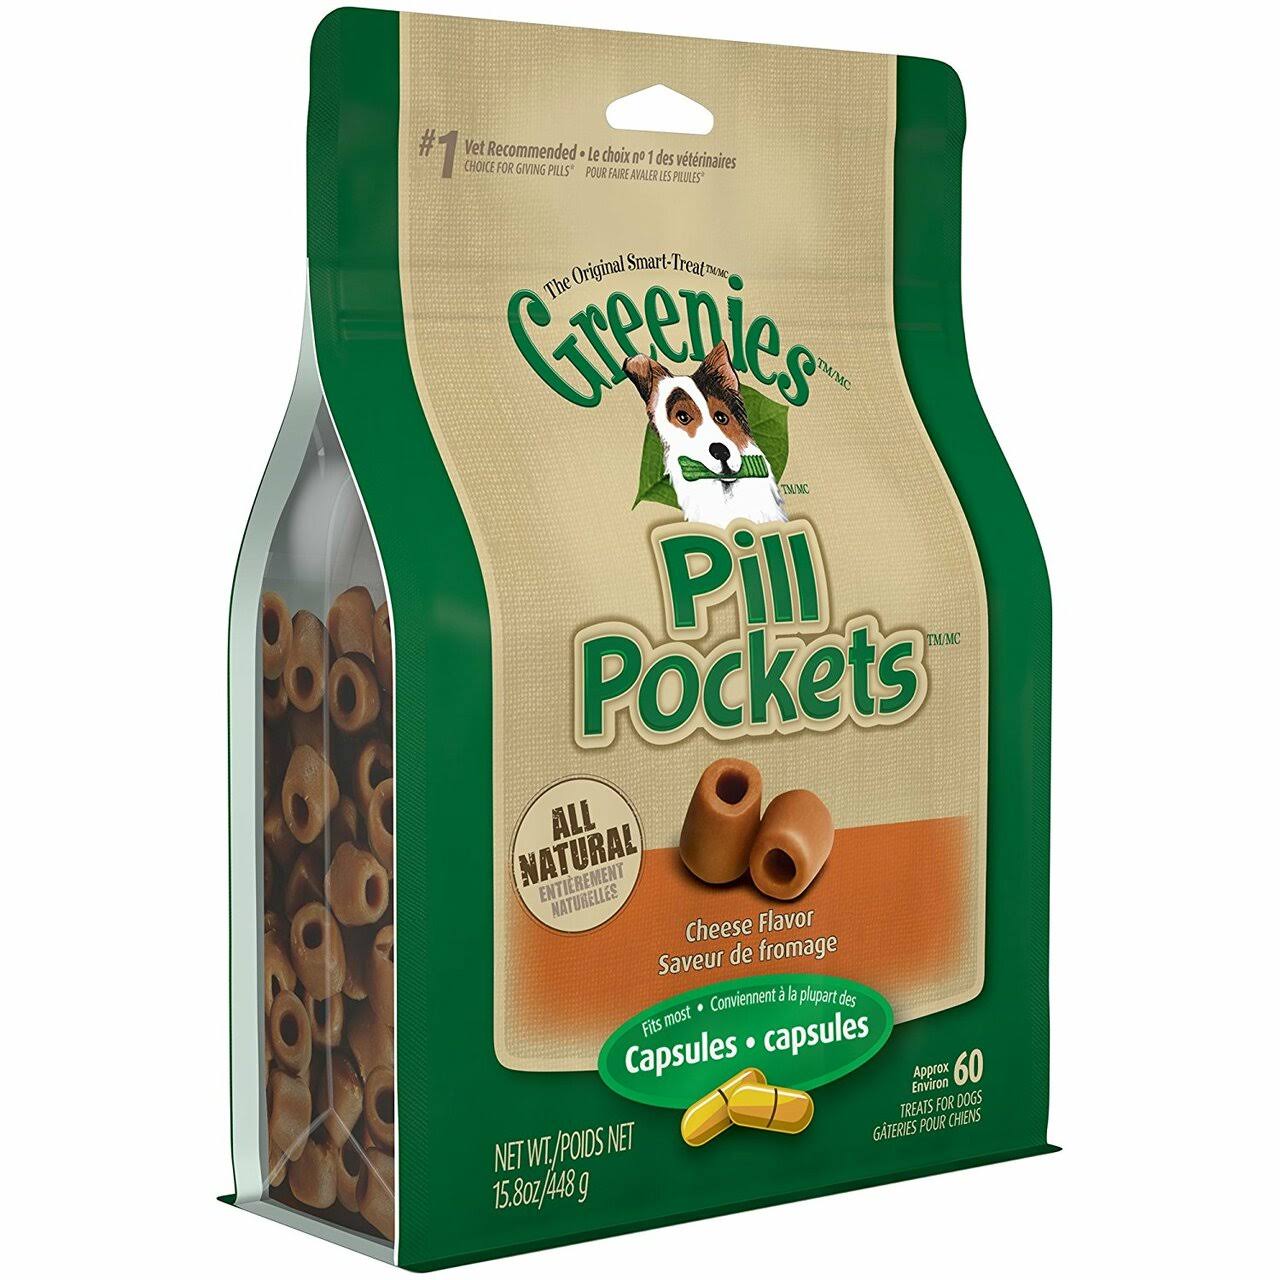 Greenies 15.8 oz Pill Pockets Cheese Flavor Dog Treats